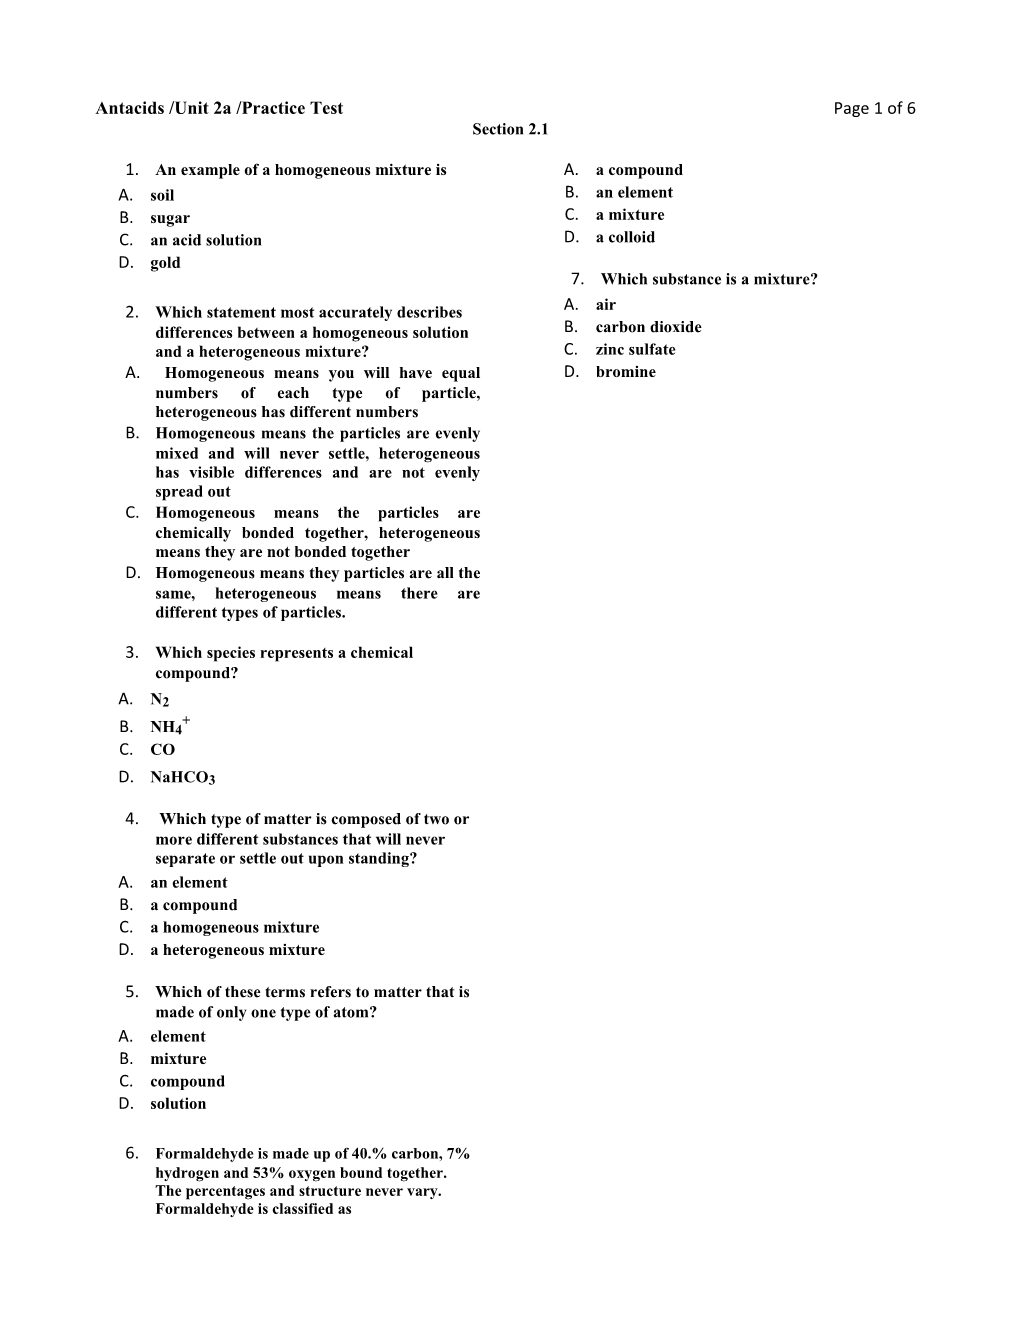 Antacids /Unit 2A /Practice Testpage 1 of 4